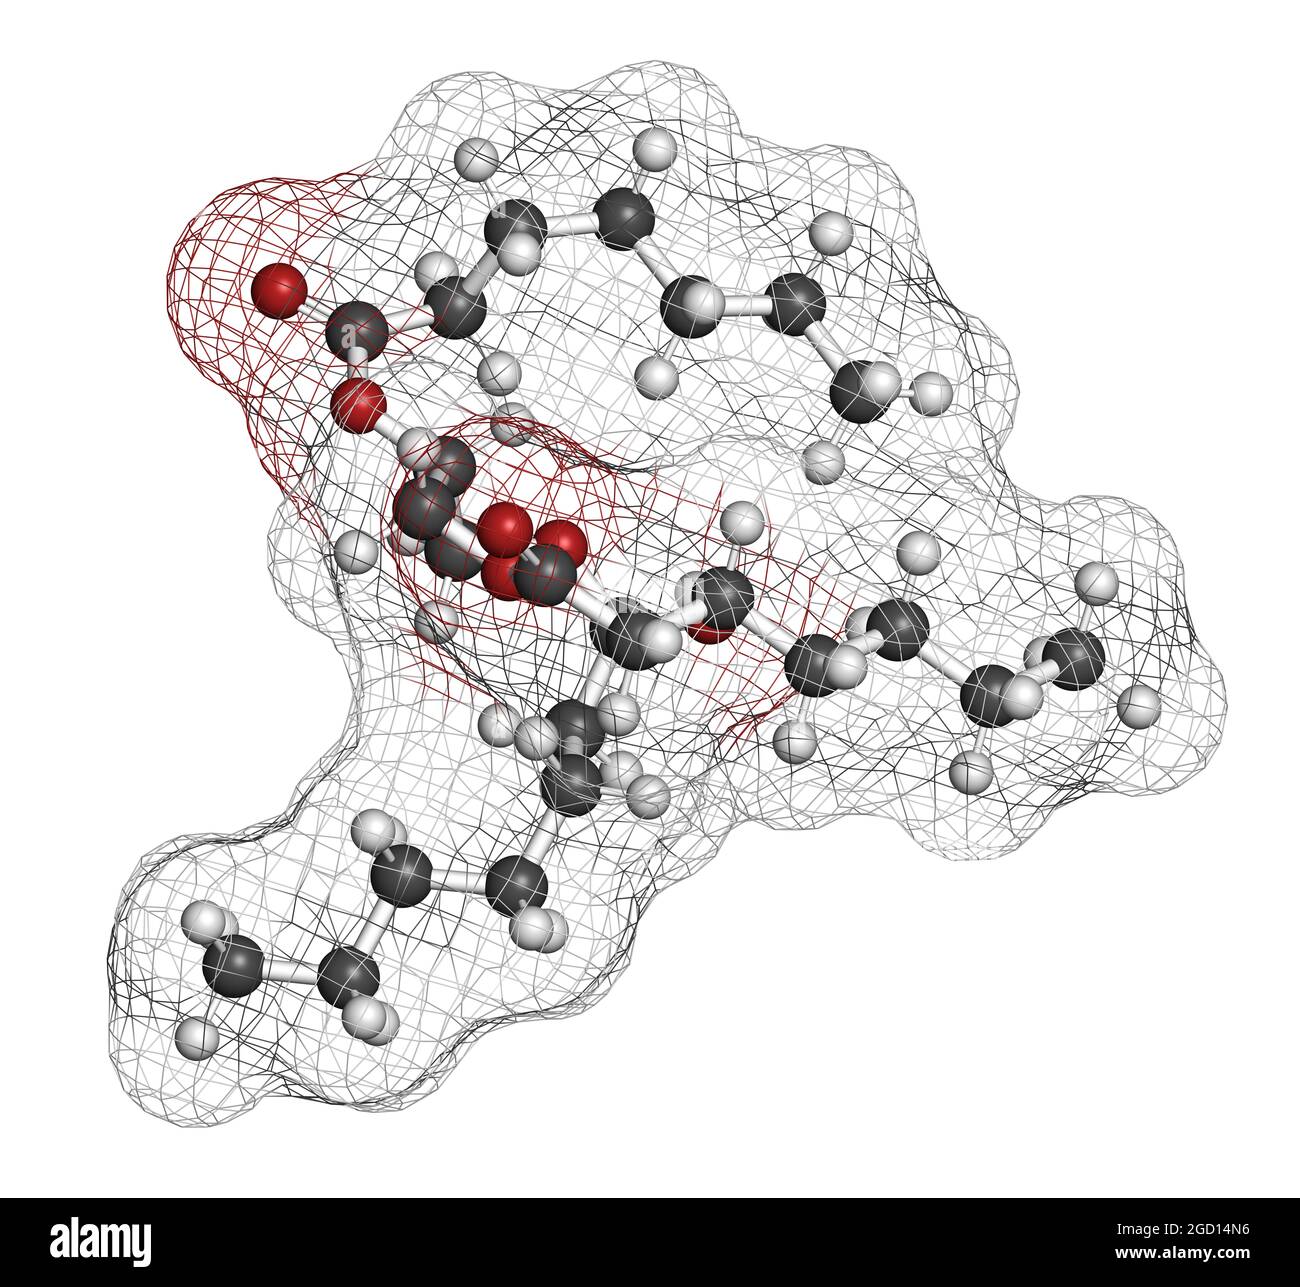 Triheptanoin drug molecule. 3D rendering. Stock Photo